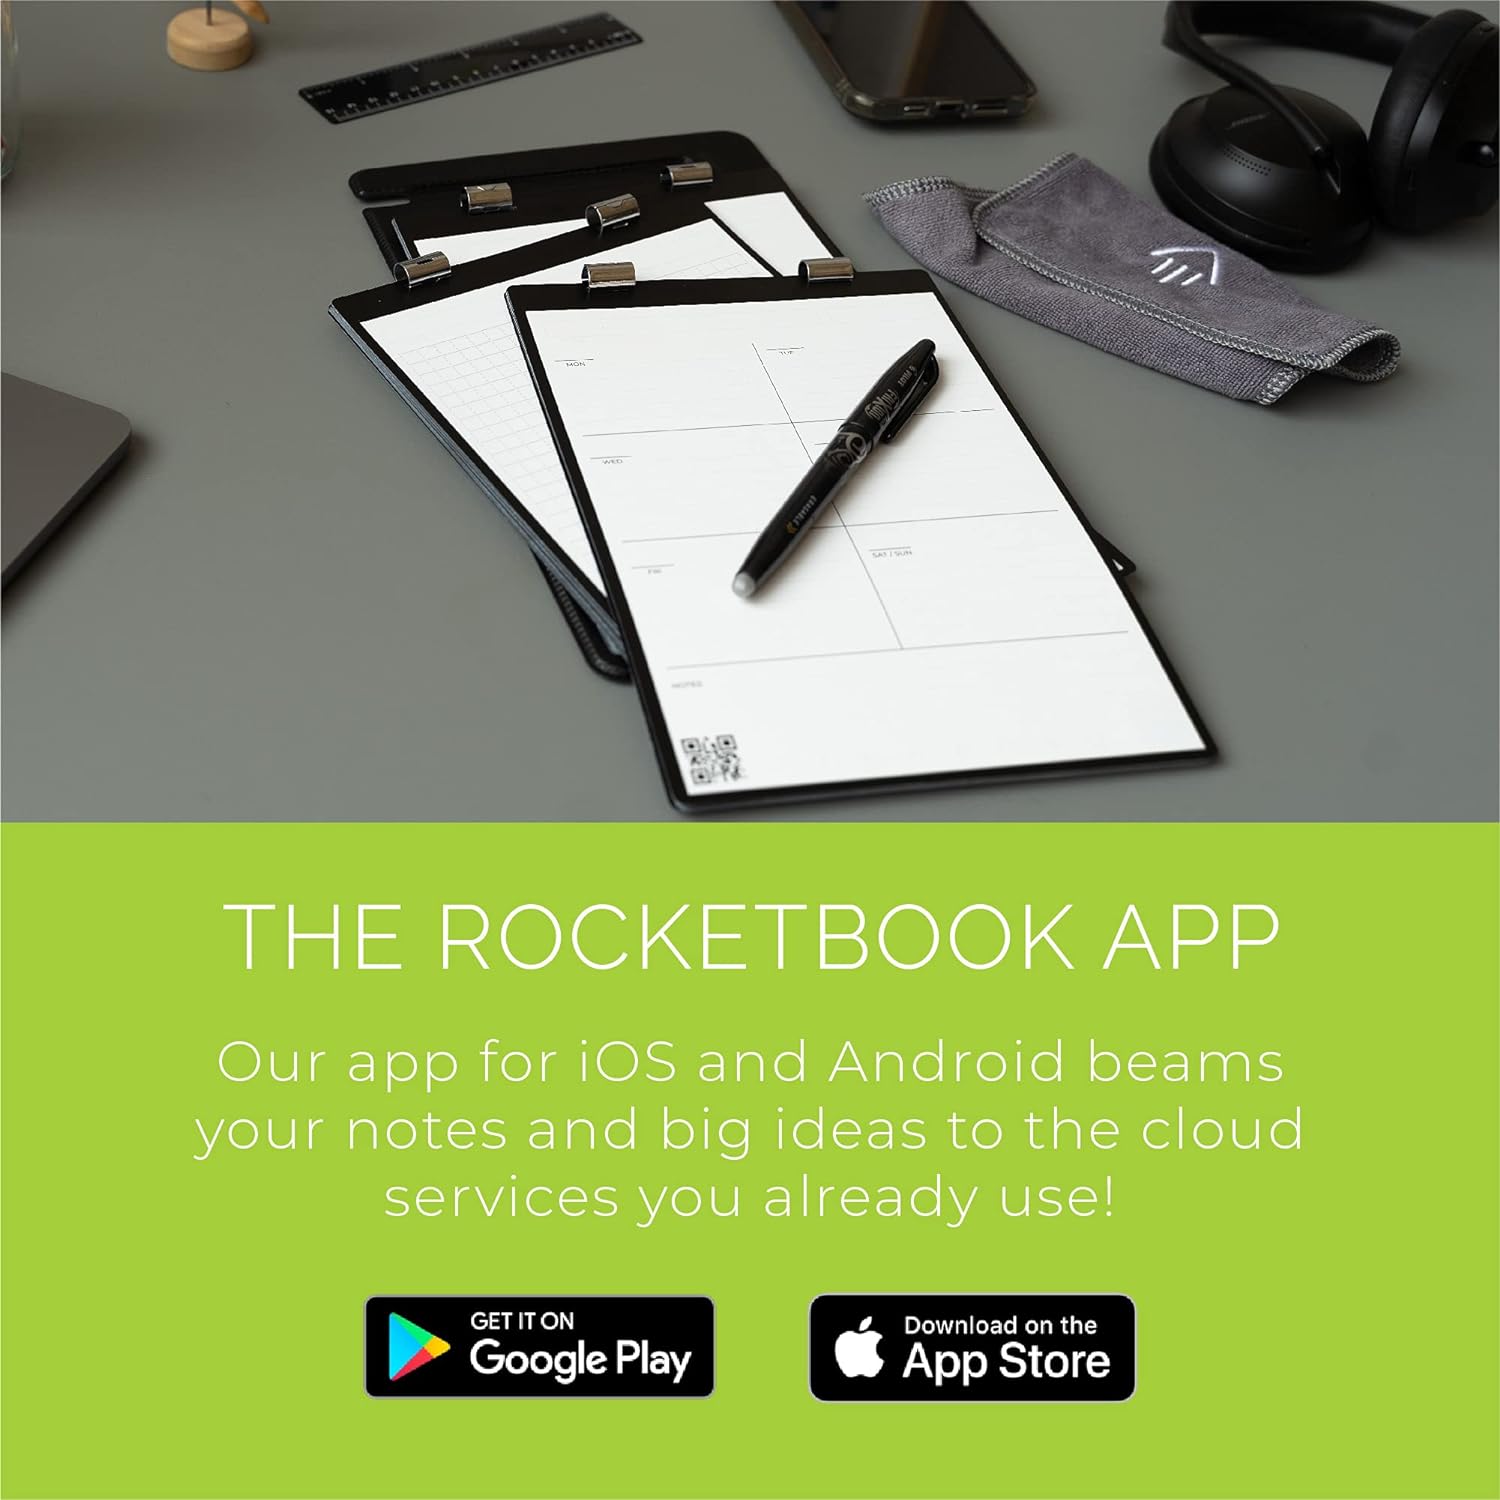 Rocketbook Orbit Executive Page Pack - Smart Reusable Legal Pad - Dot-Grid